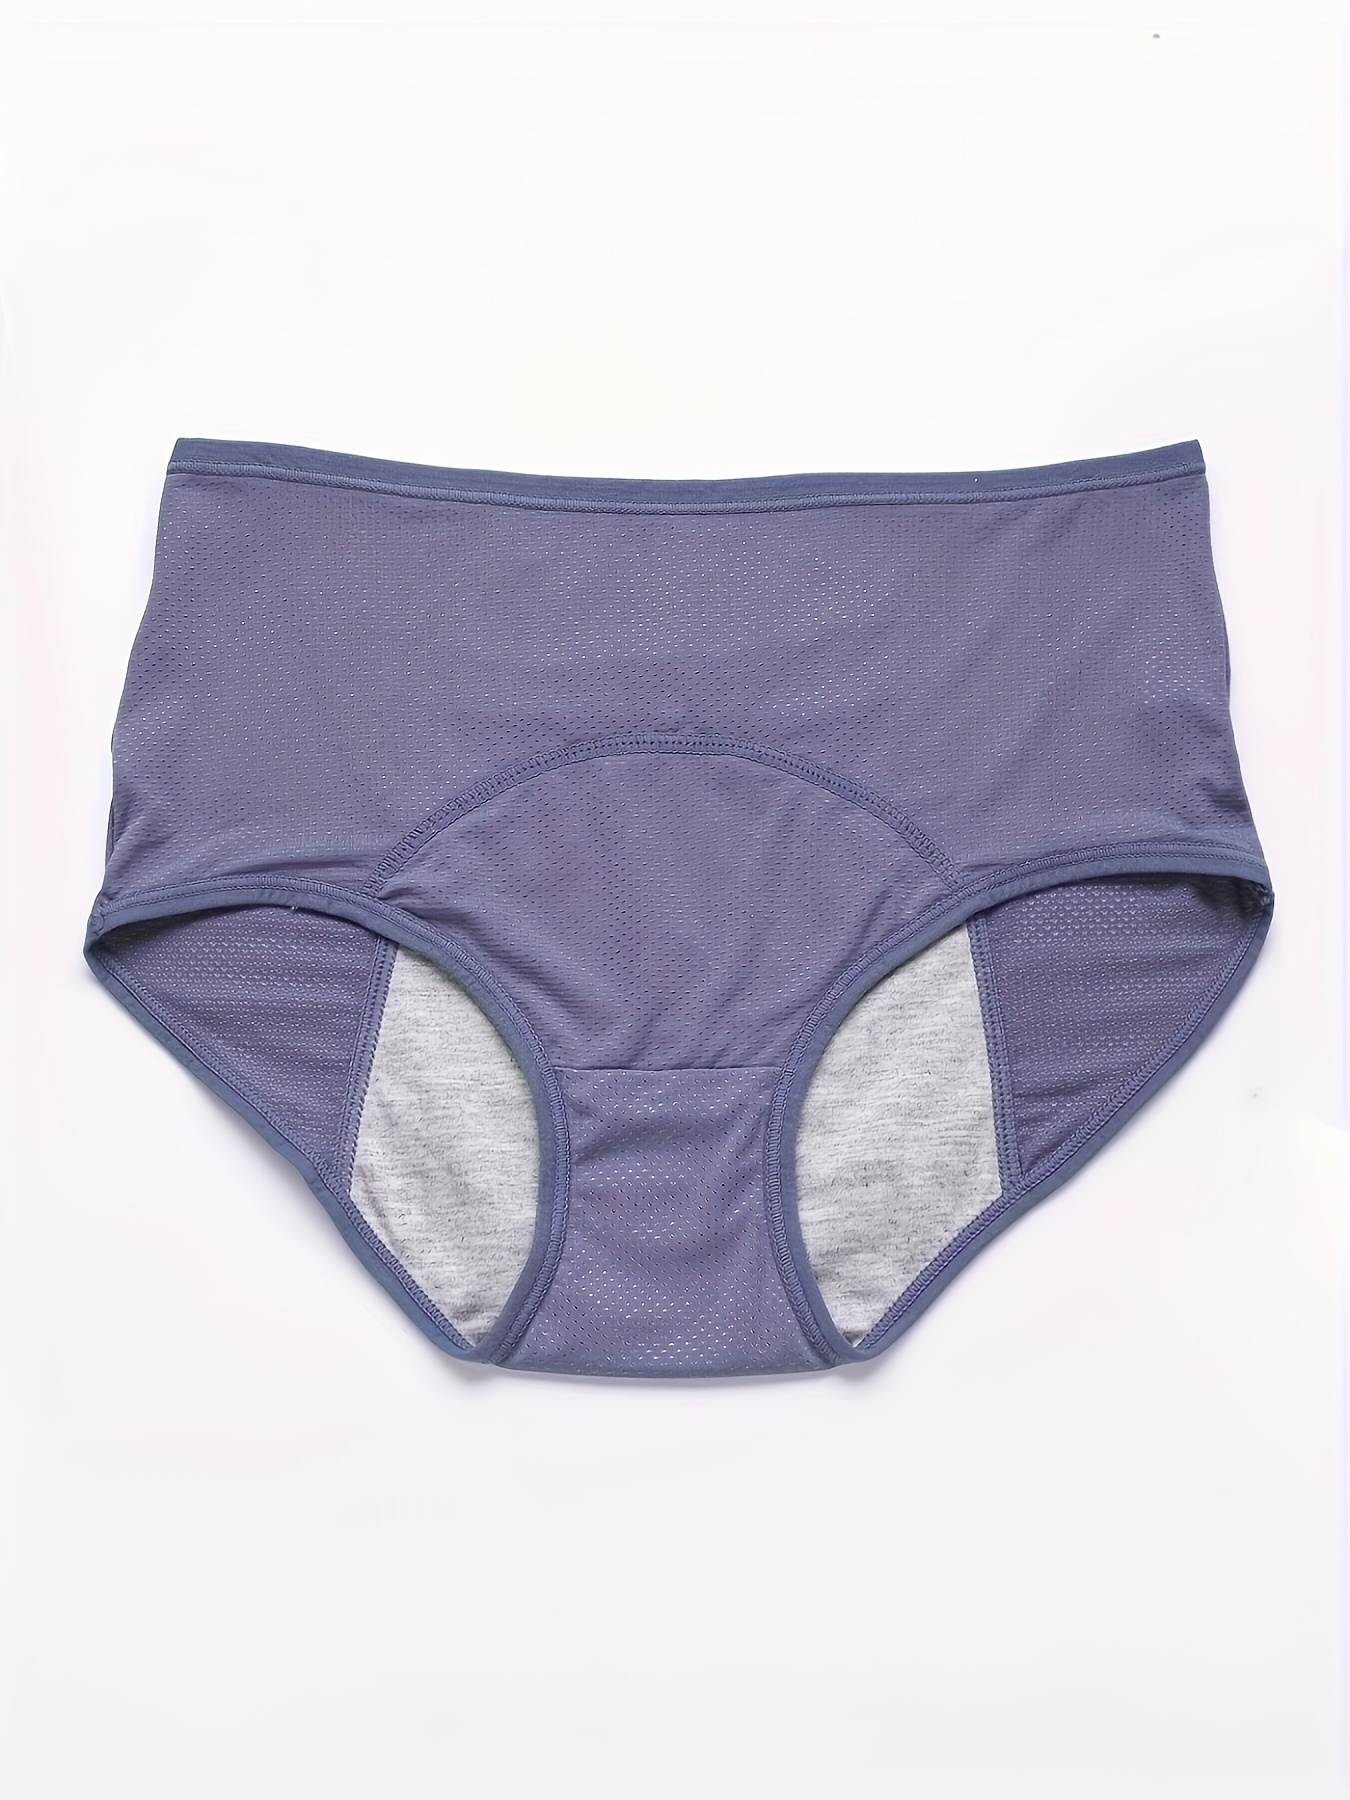 Leak Proof Period Panties Women Underwear Physiological Pants Pack of 1